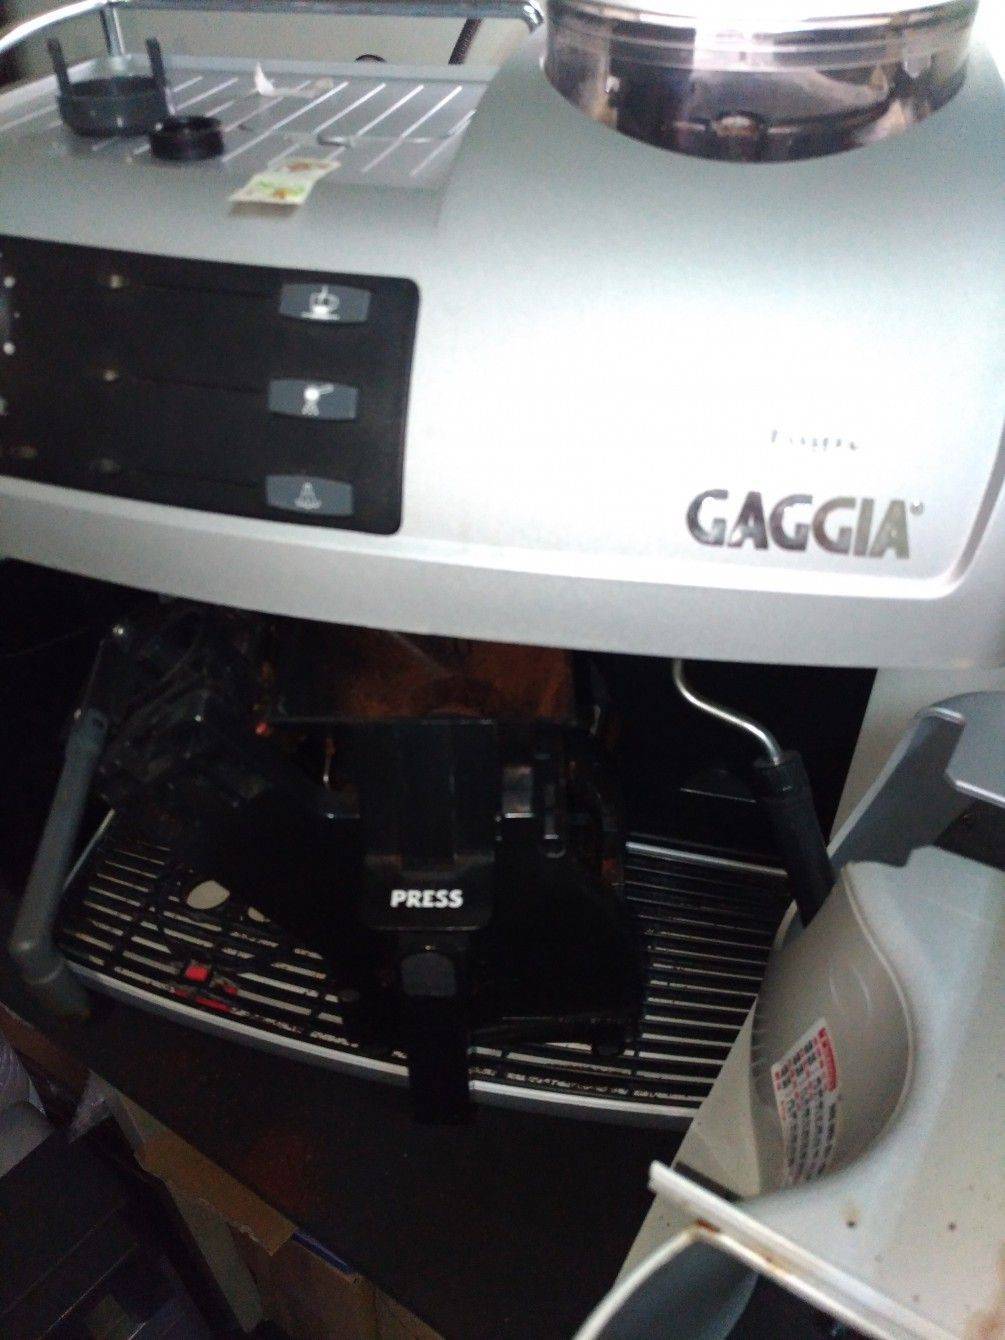 GAGGLA全自動咖啡機維修圖檔106..7.01維修處理